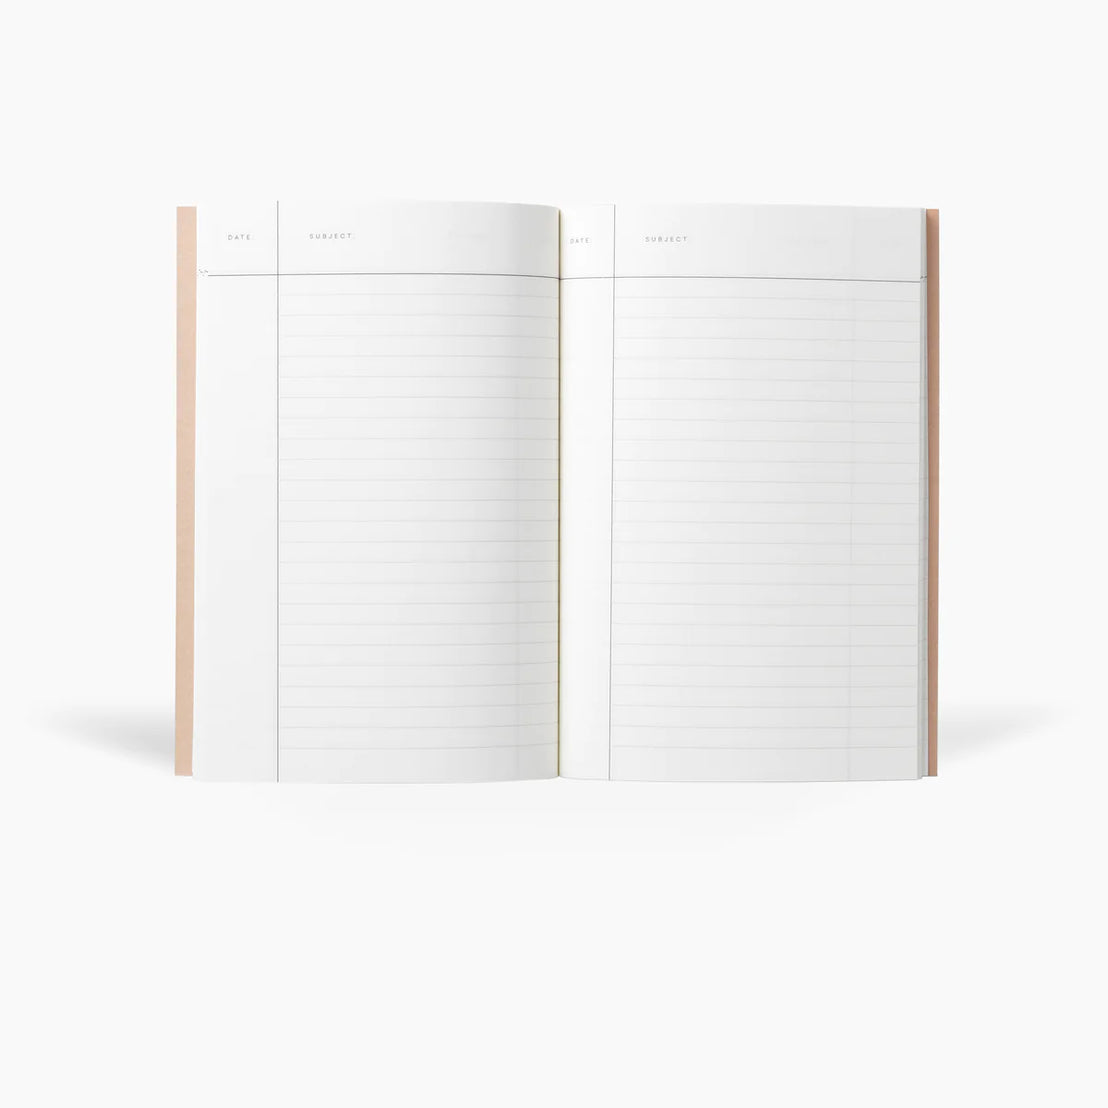 Vita Small Notebook, NOTEM